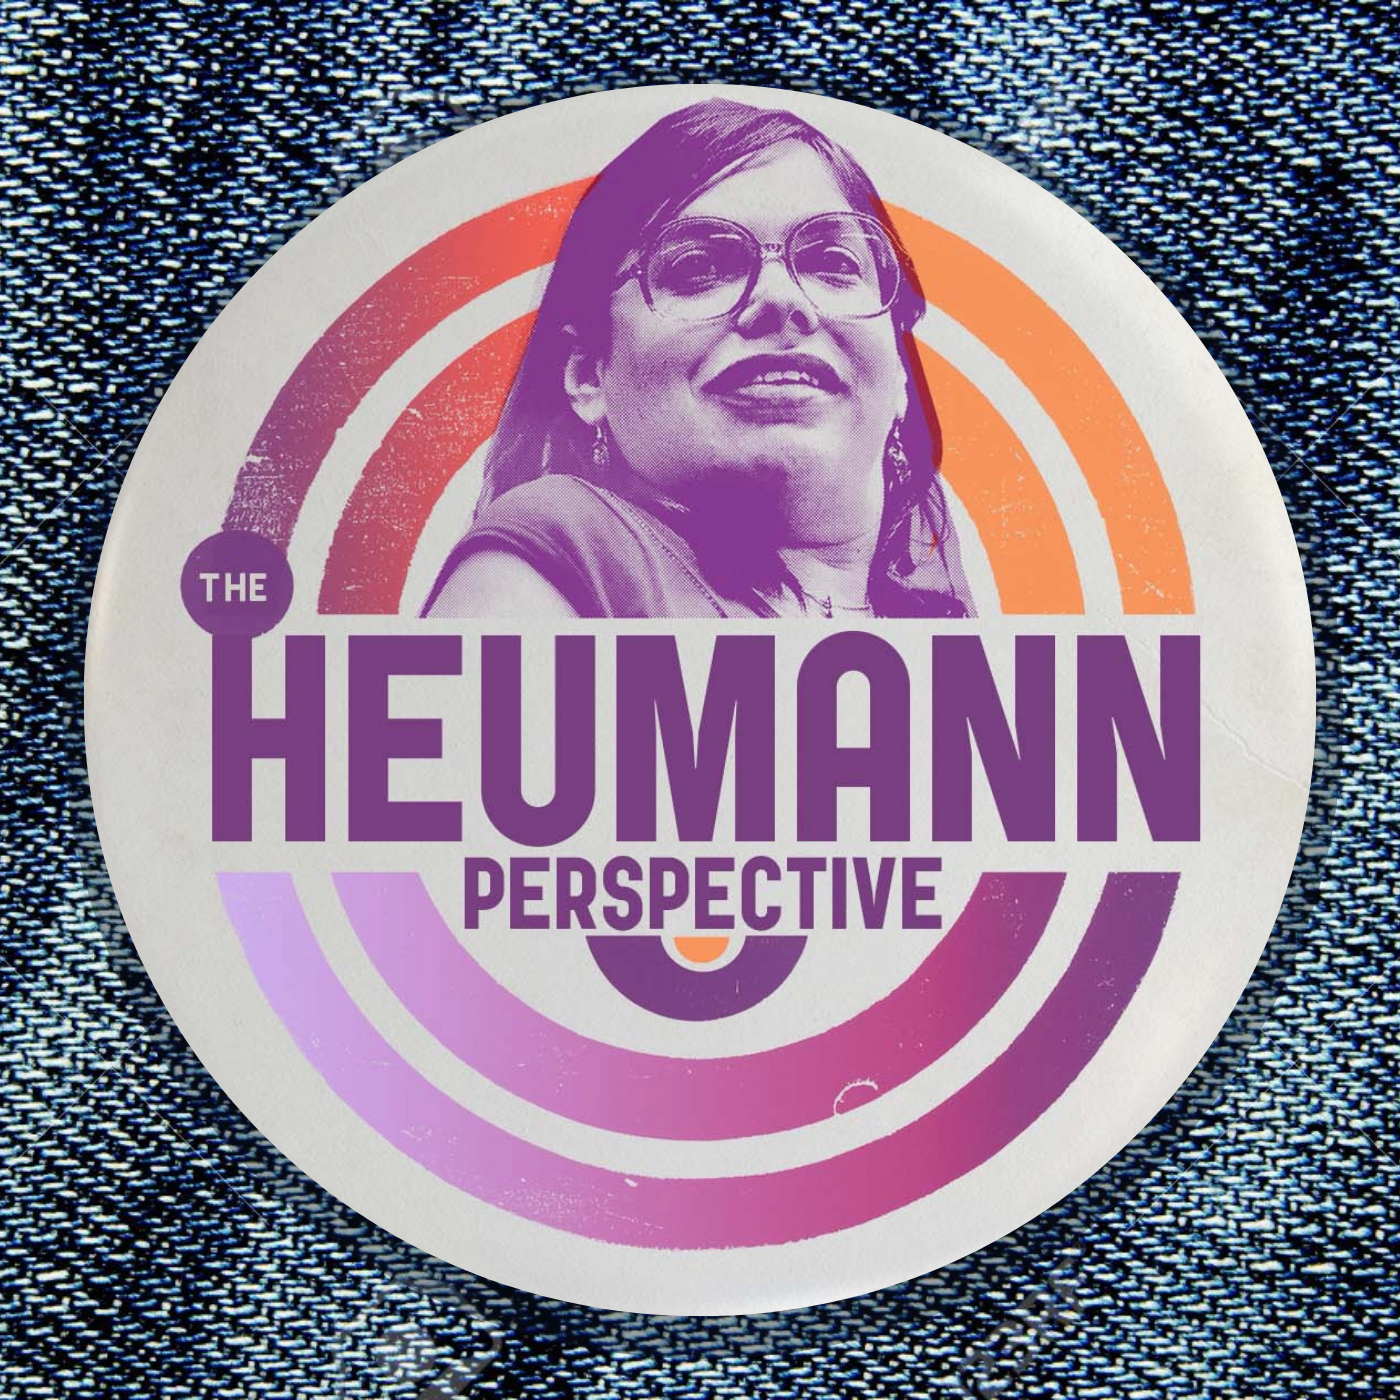 The Heumann Perspective 